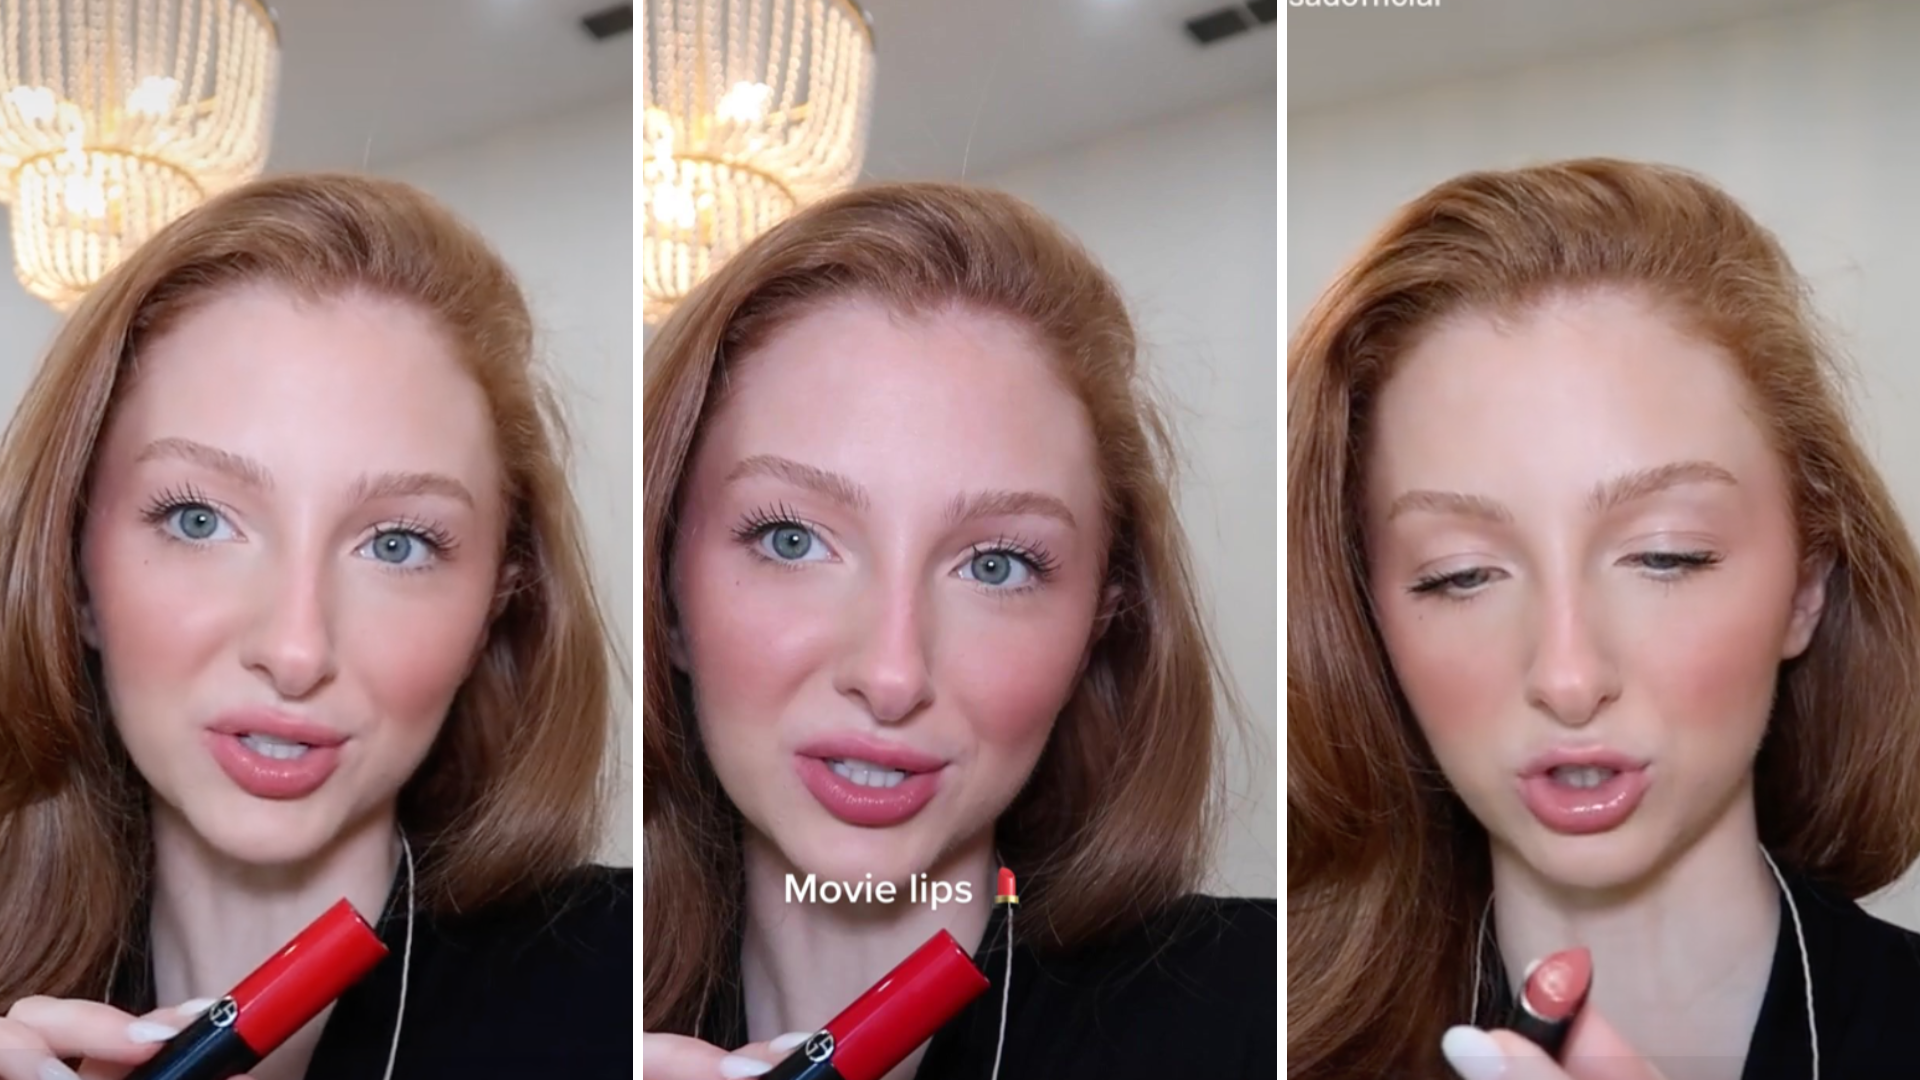 TikTok’s “Movie Lips” Is the Romantic Redhead Makeup Trend We Love